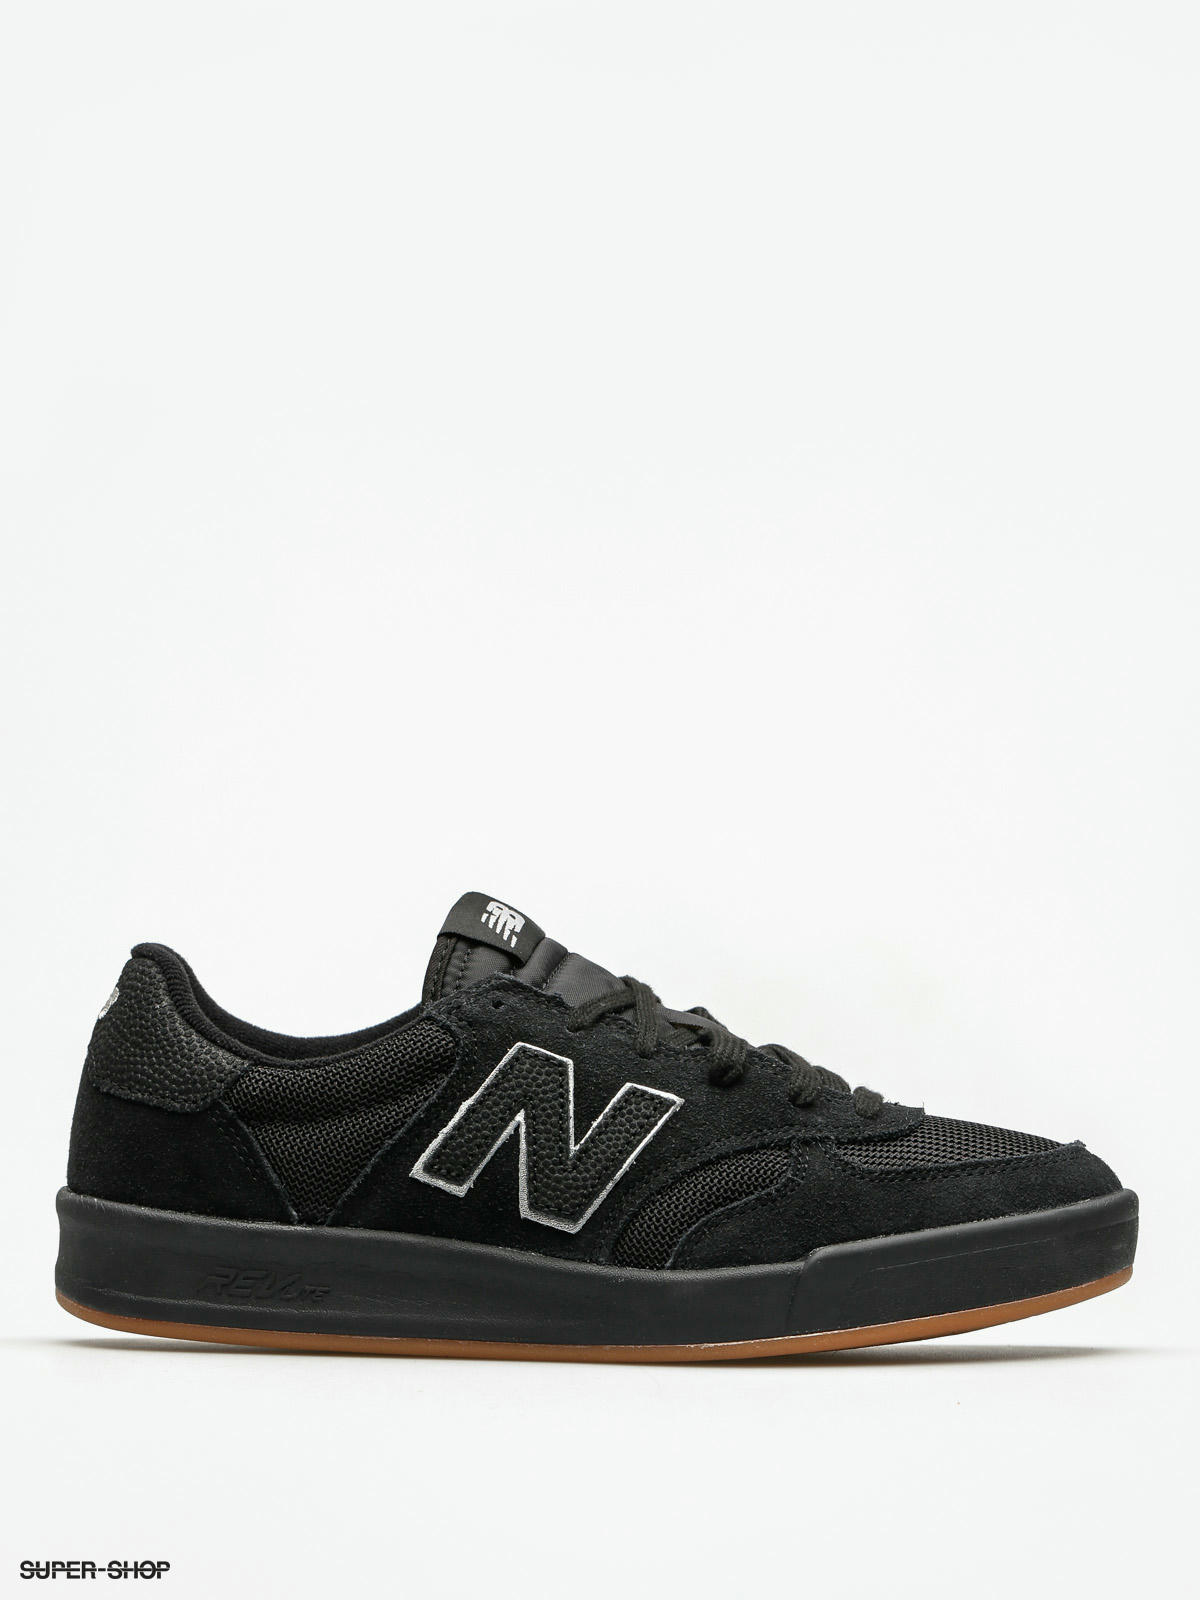 New Balance Shoes 300 (black)